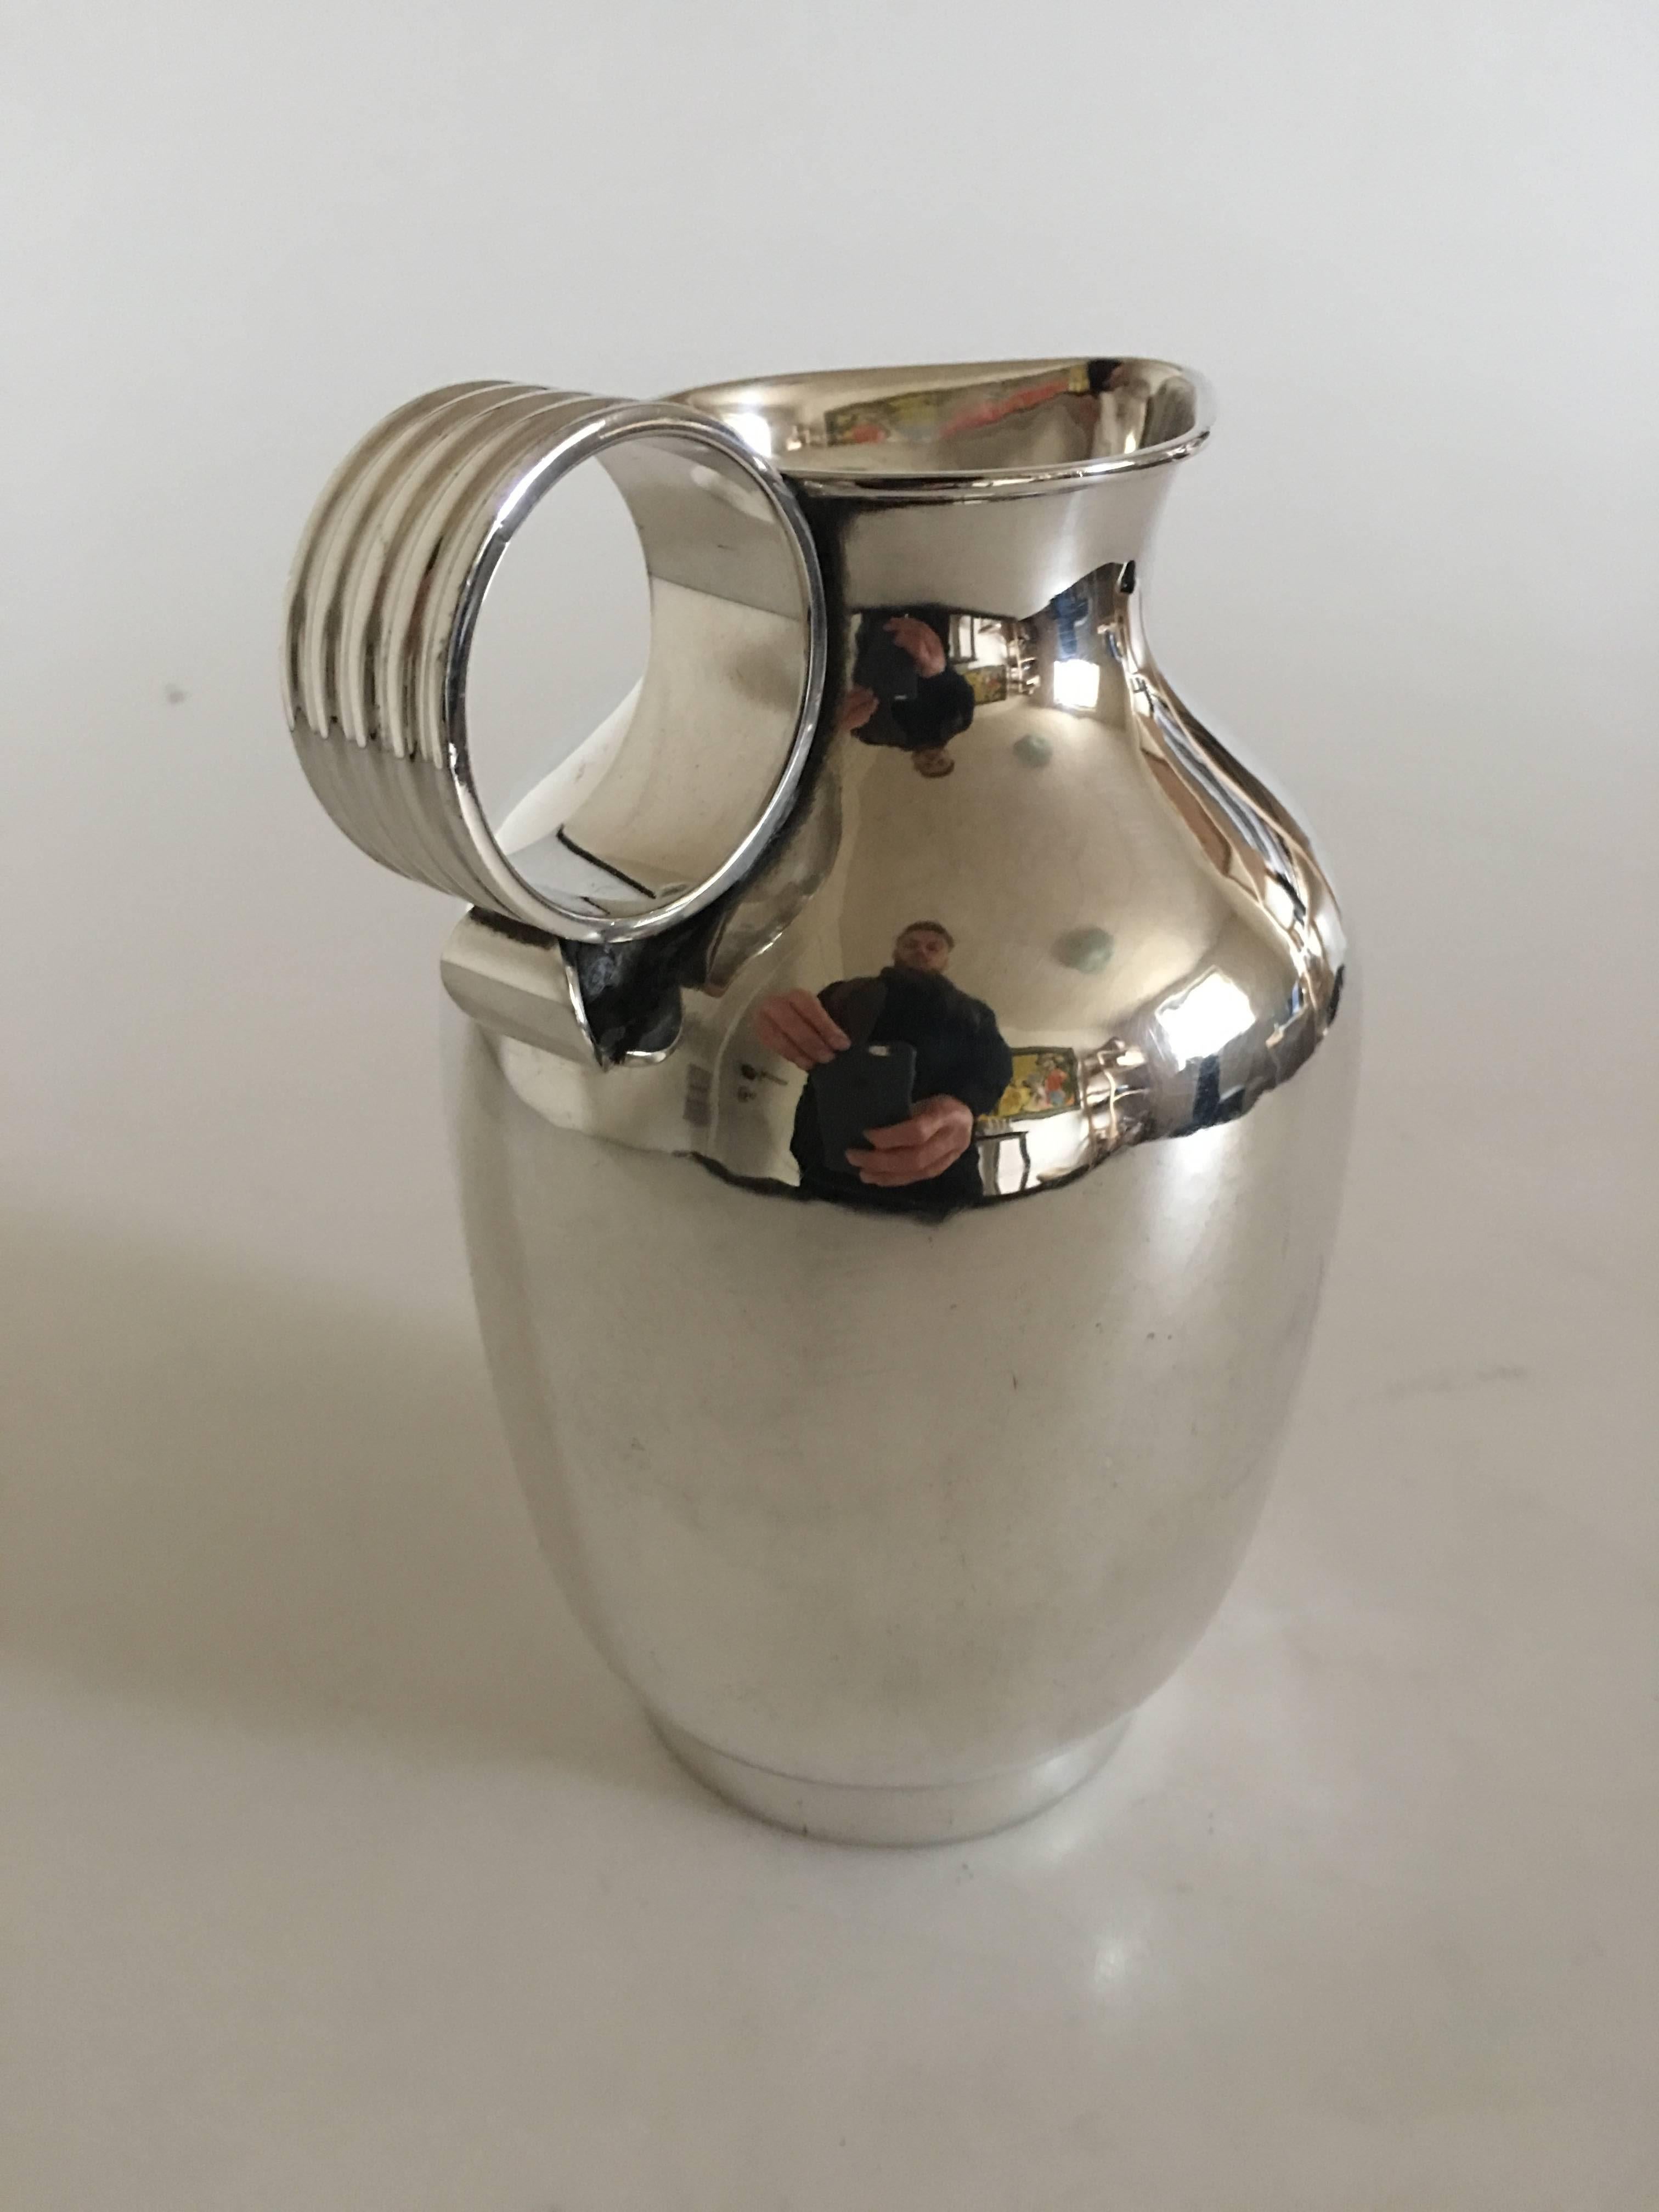 Georg Jensen sterling silver jug with round handle no. 744 by Gustav Pedersen. Measures: 16.5 cm h (6 1/2